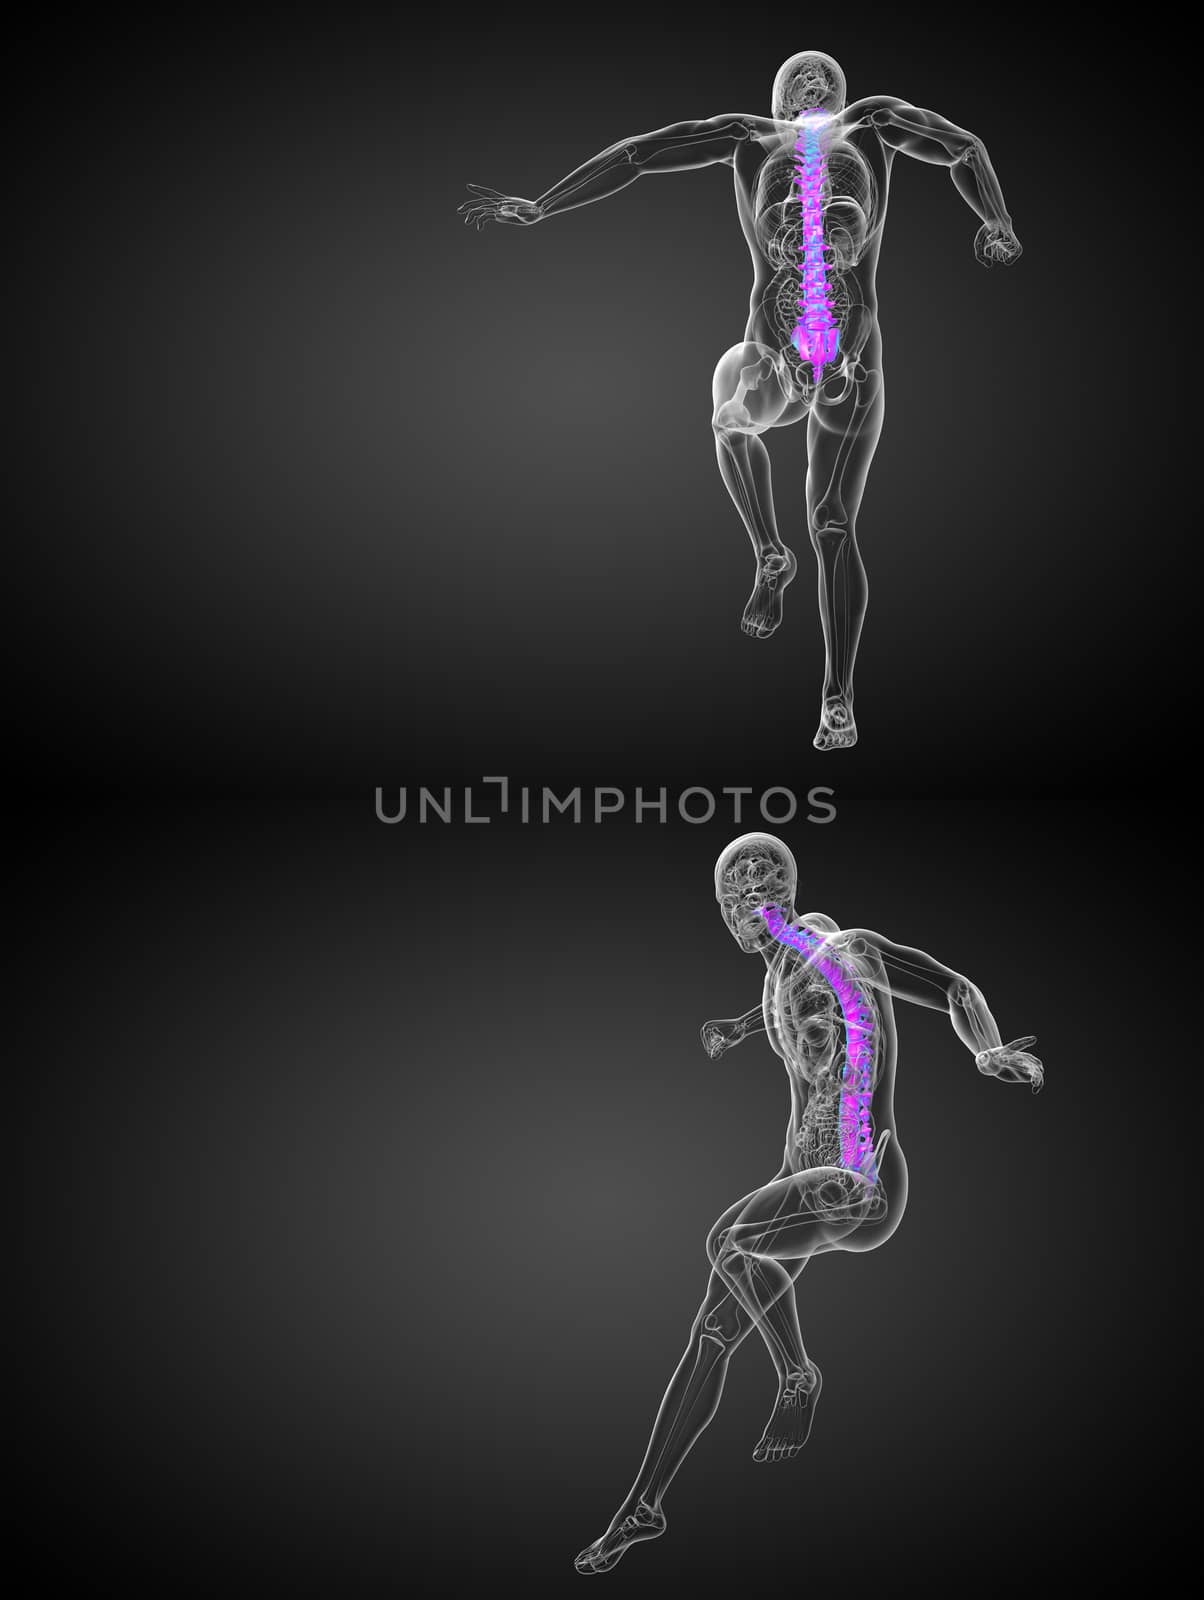 3d rendering medical illustration of the human spine 